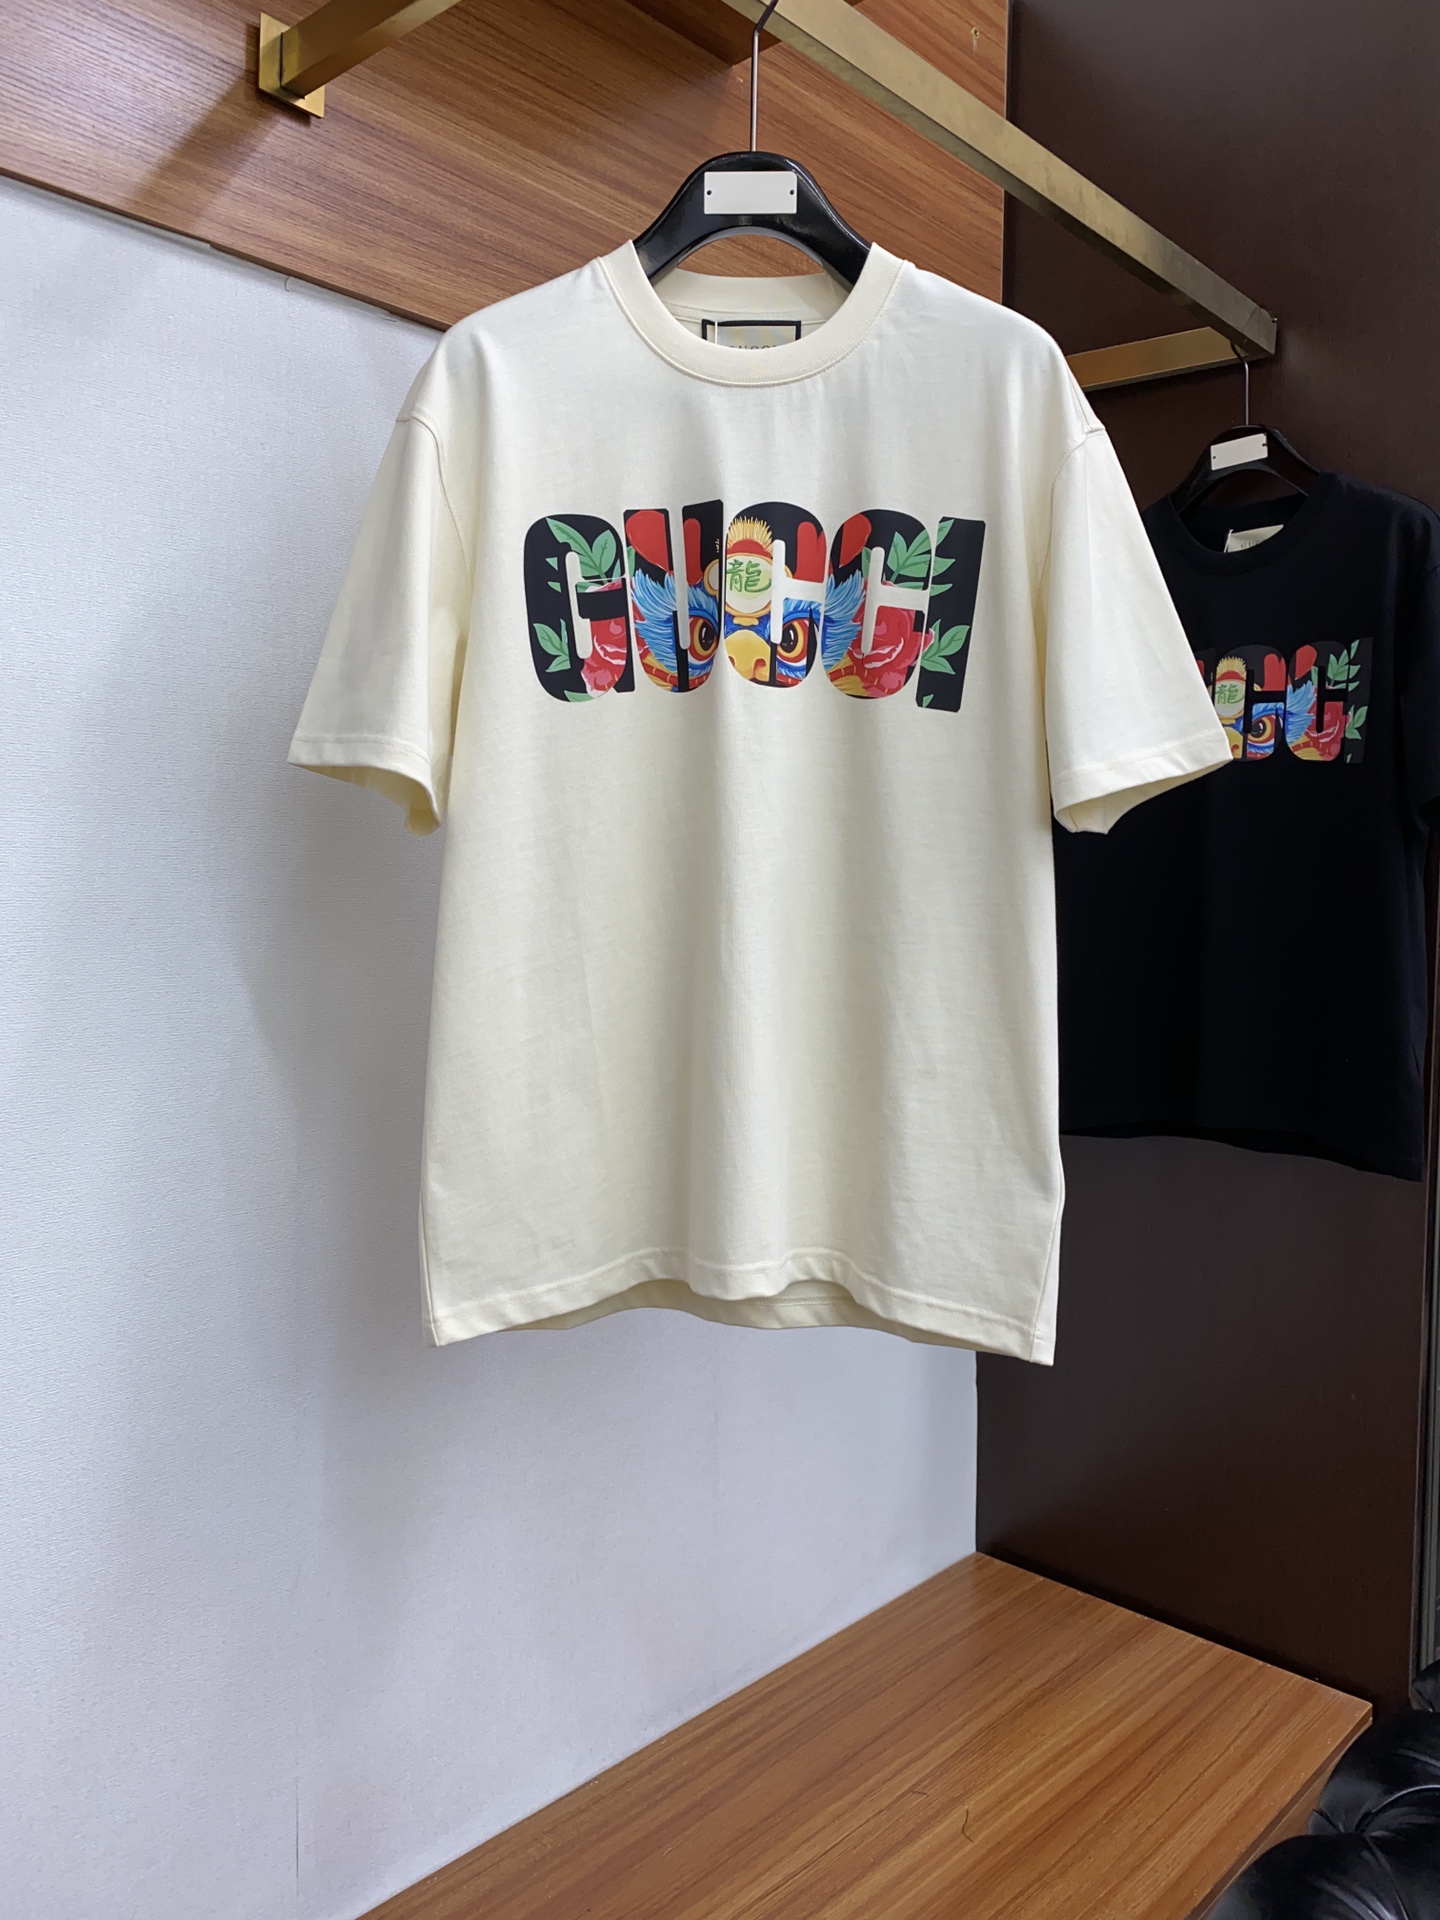 Gucci Clothing T-Shirt Printing Unisex Cotton Short Sleeve